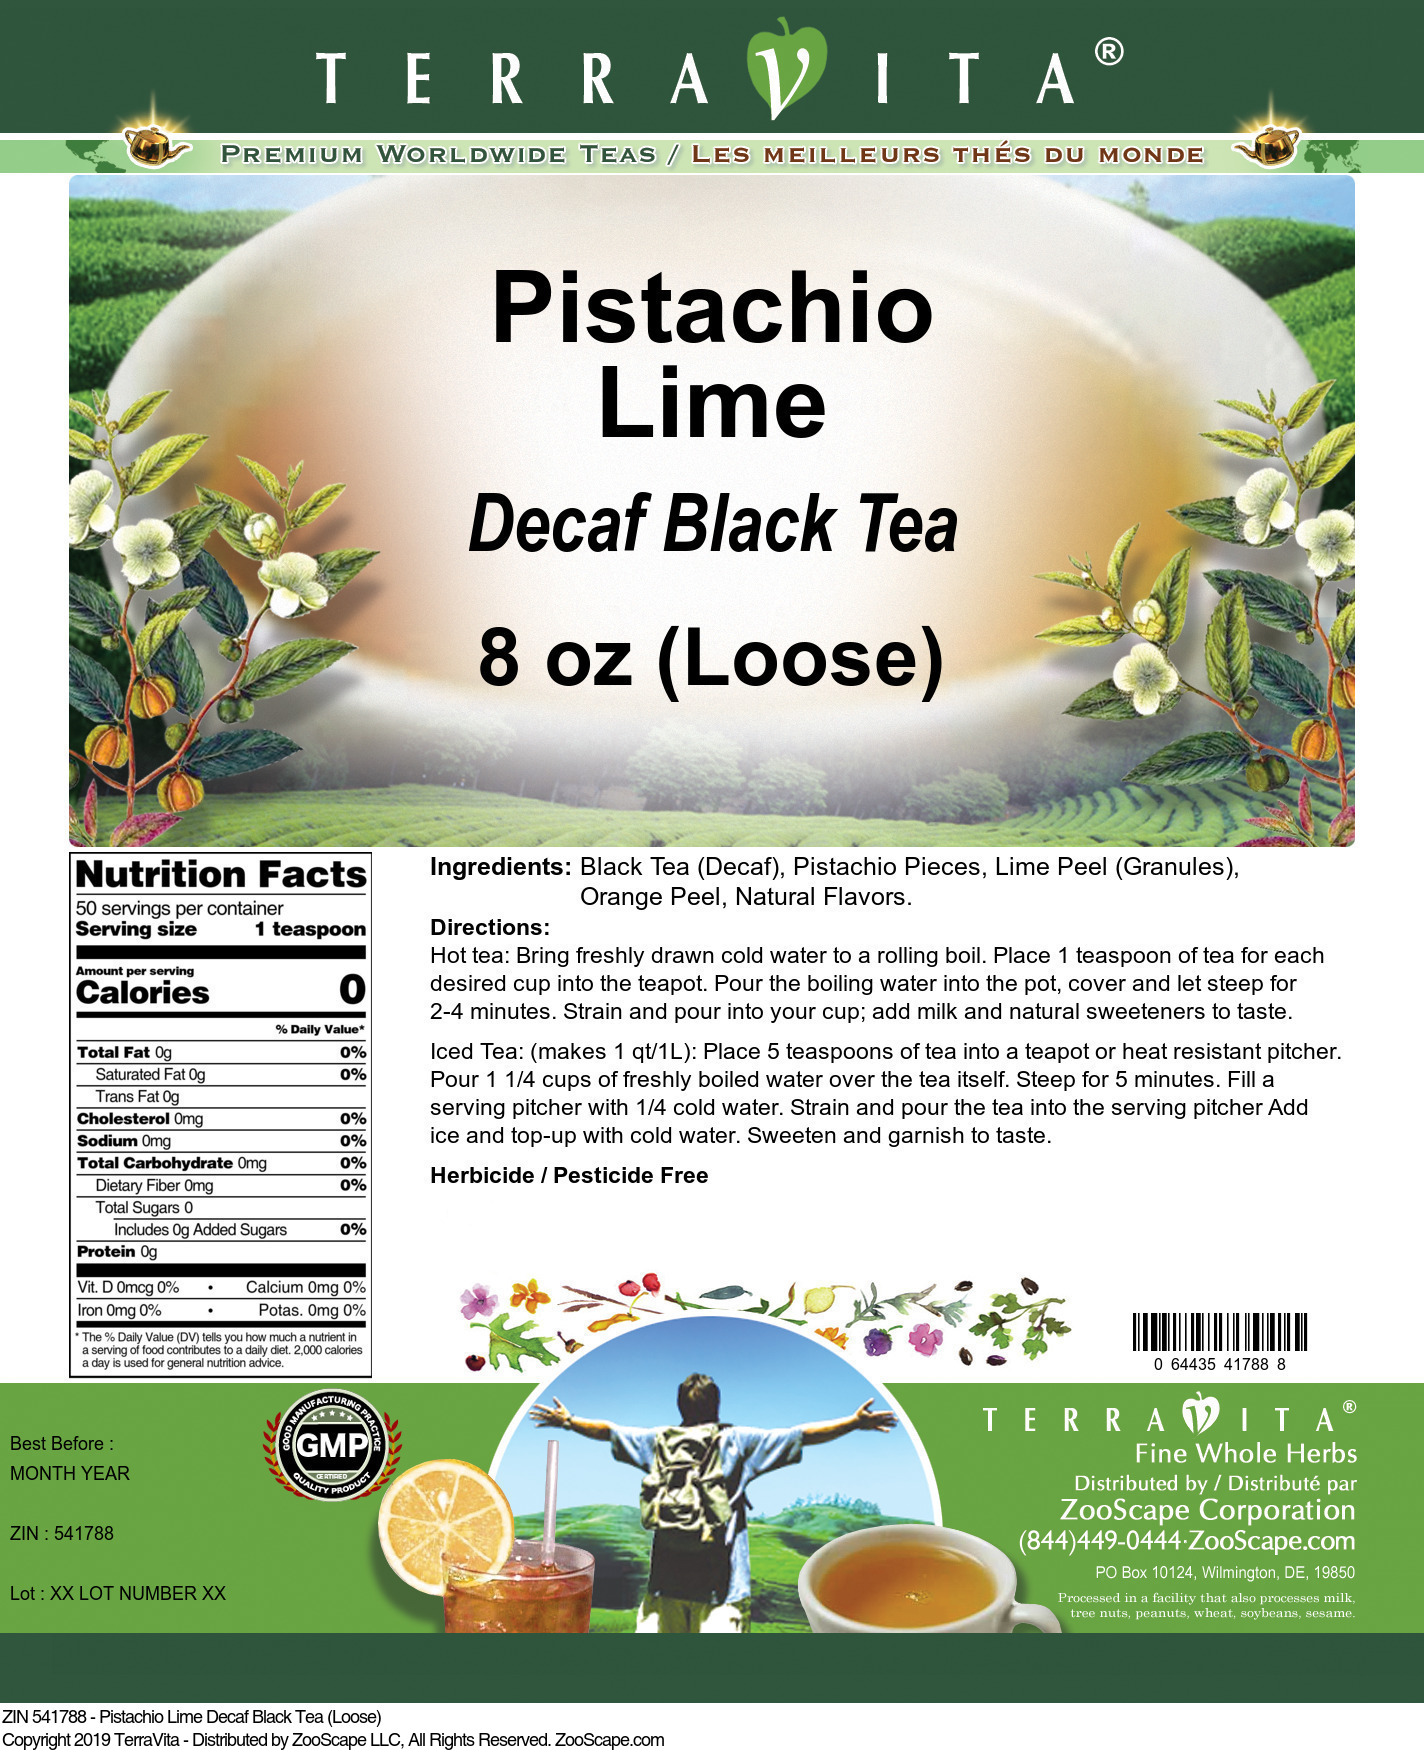 Pistachio Lime Decaf Black Tea (Loose) - Label